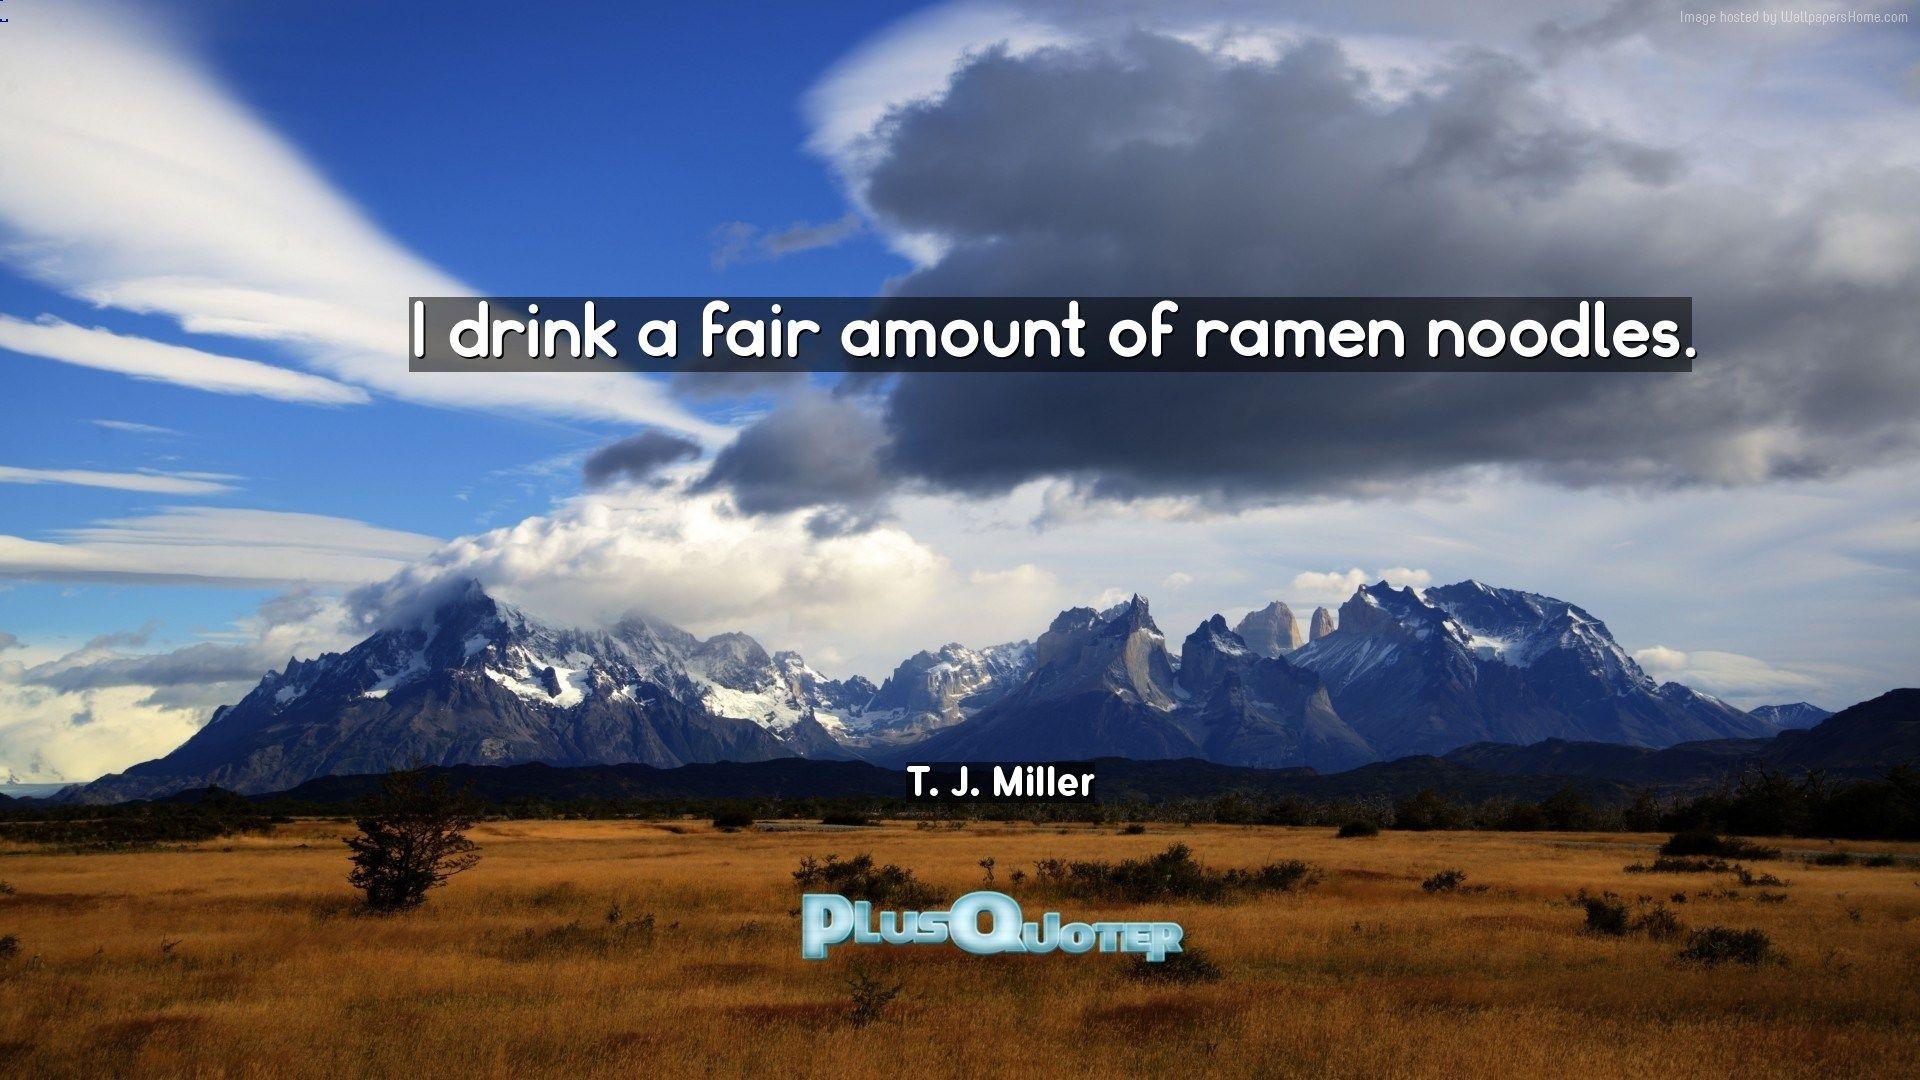 I drink a fair amount of ramen noodles- T. J. Miller. PlusQuoter